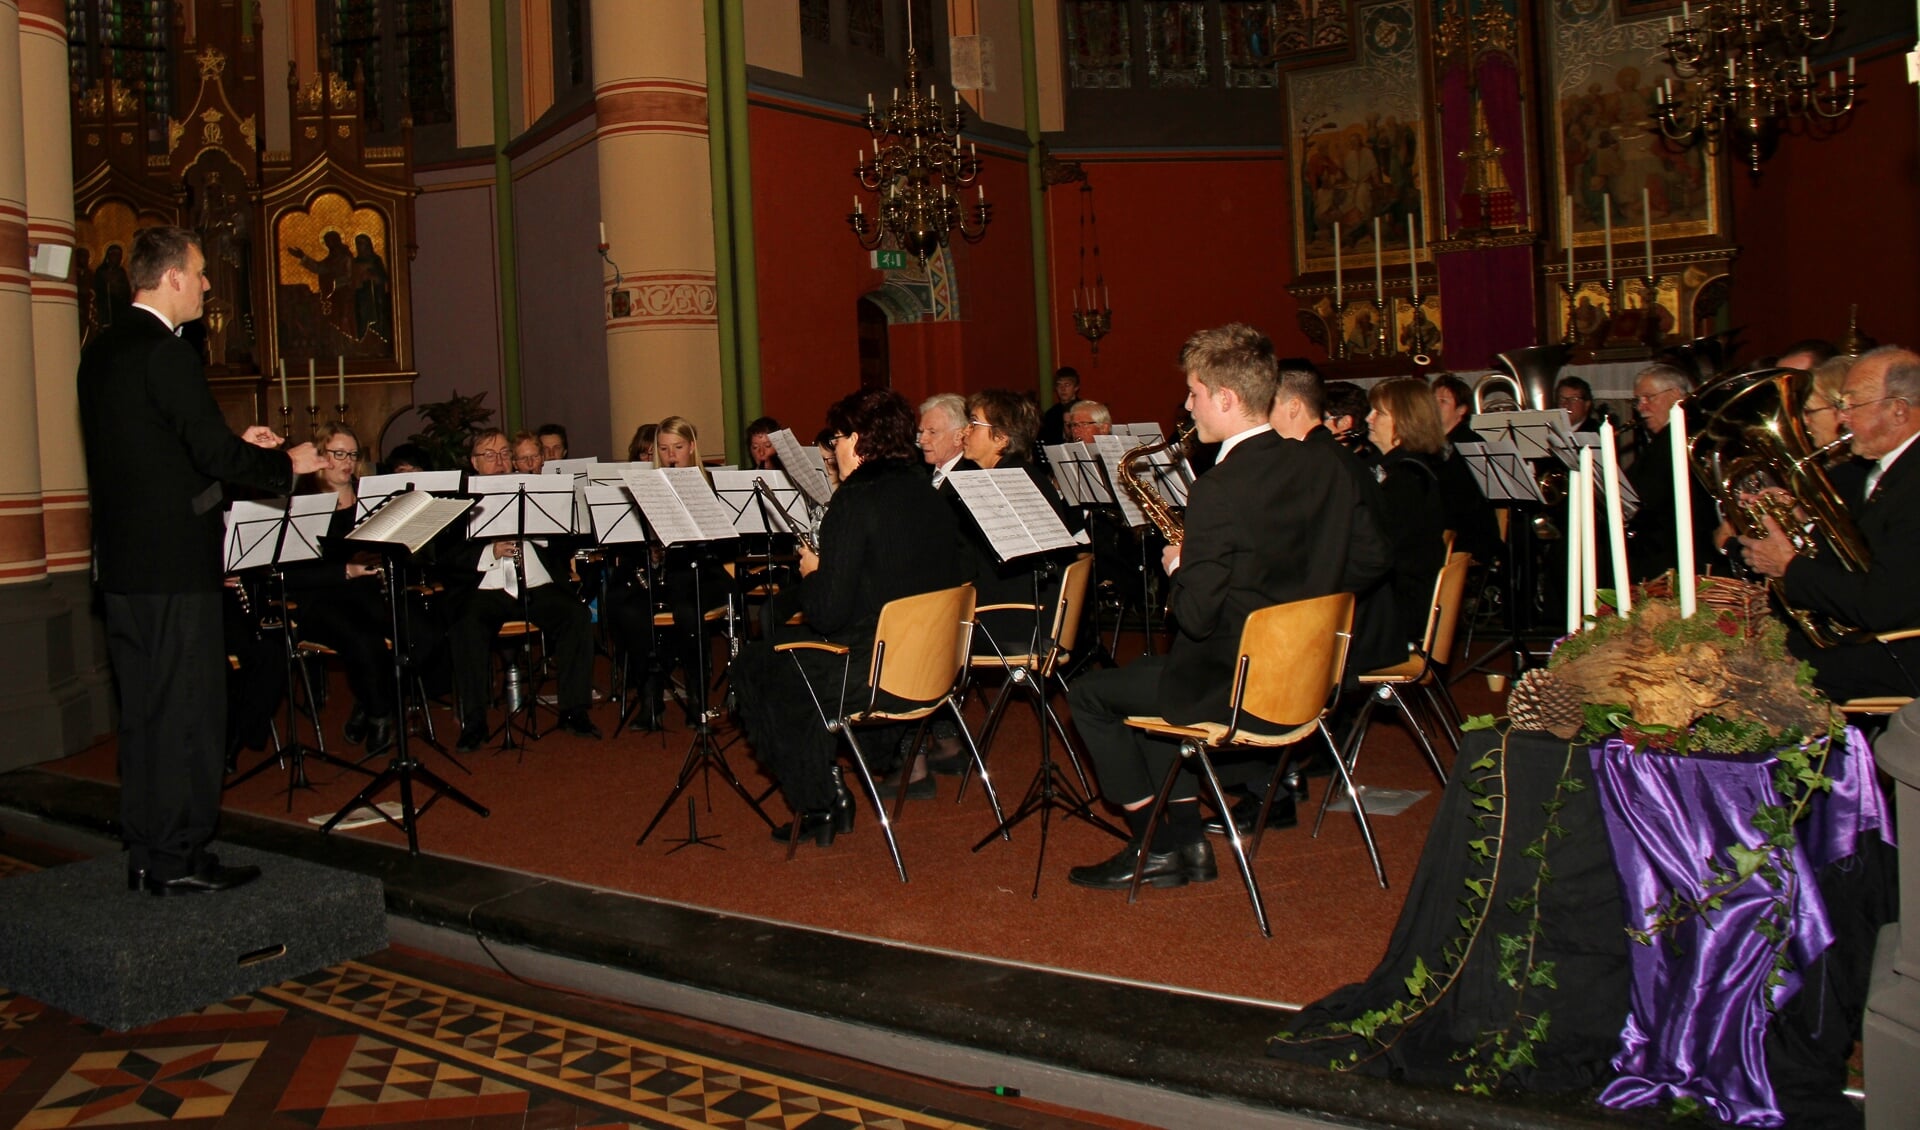 Muziekvereniging Jubal gaf haar concert in de St. Martinuskerk. Foto: Liesbeth Spaansen